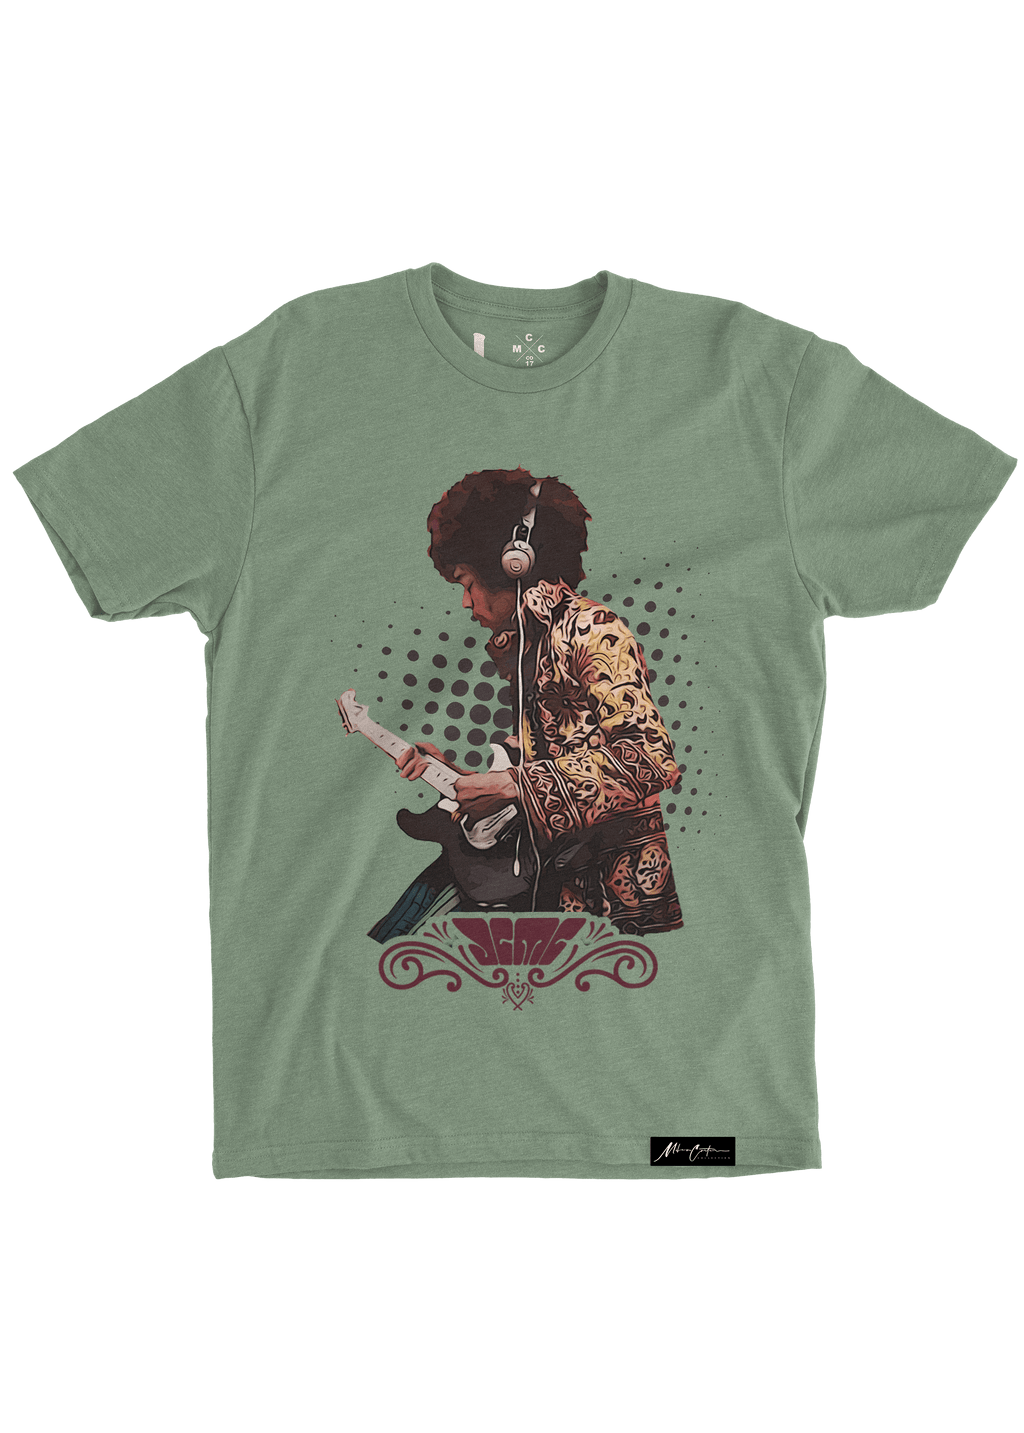 Miles Carter Designs Shirt S The Jimi Hendrix Experience